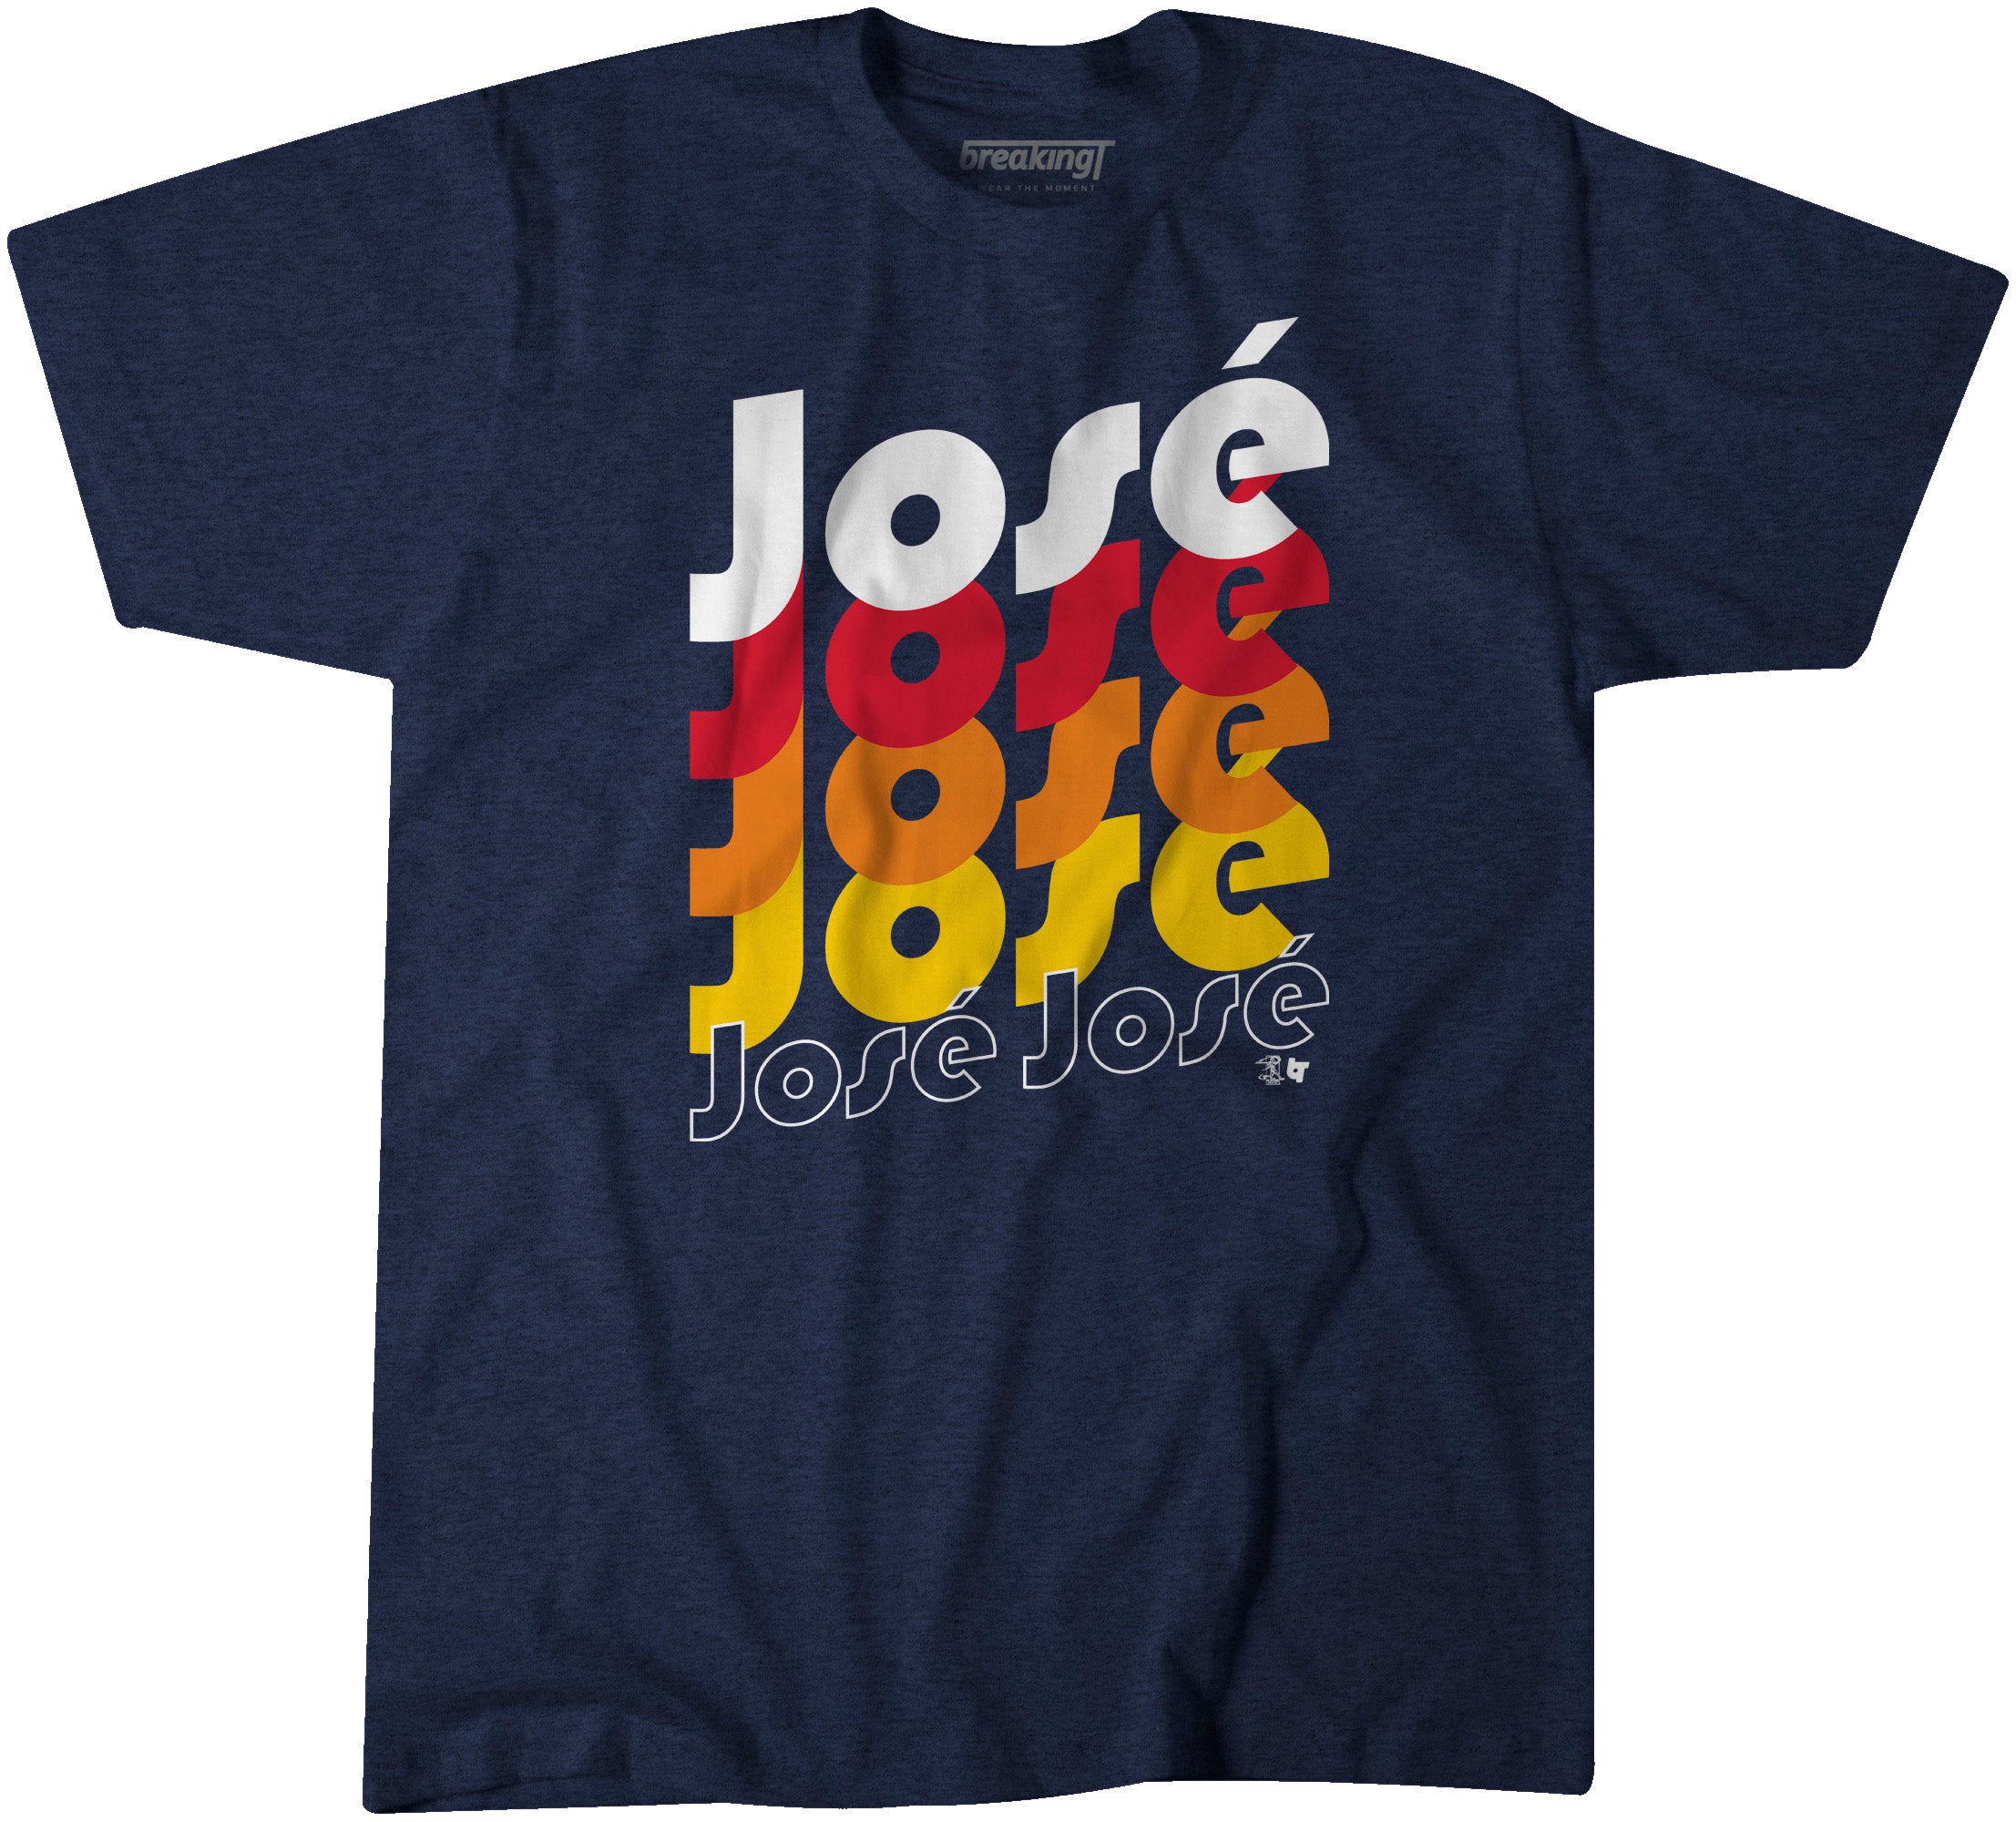 Official Breakingt Merch Jose Altuve 2000 Hits Signature Shirt